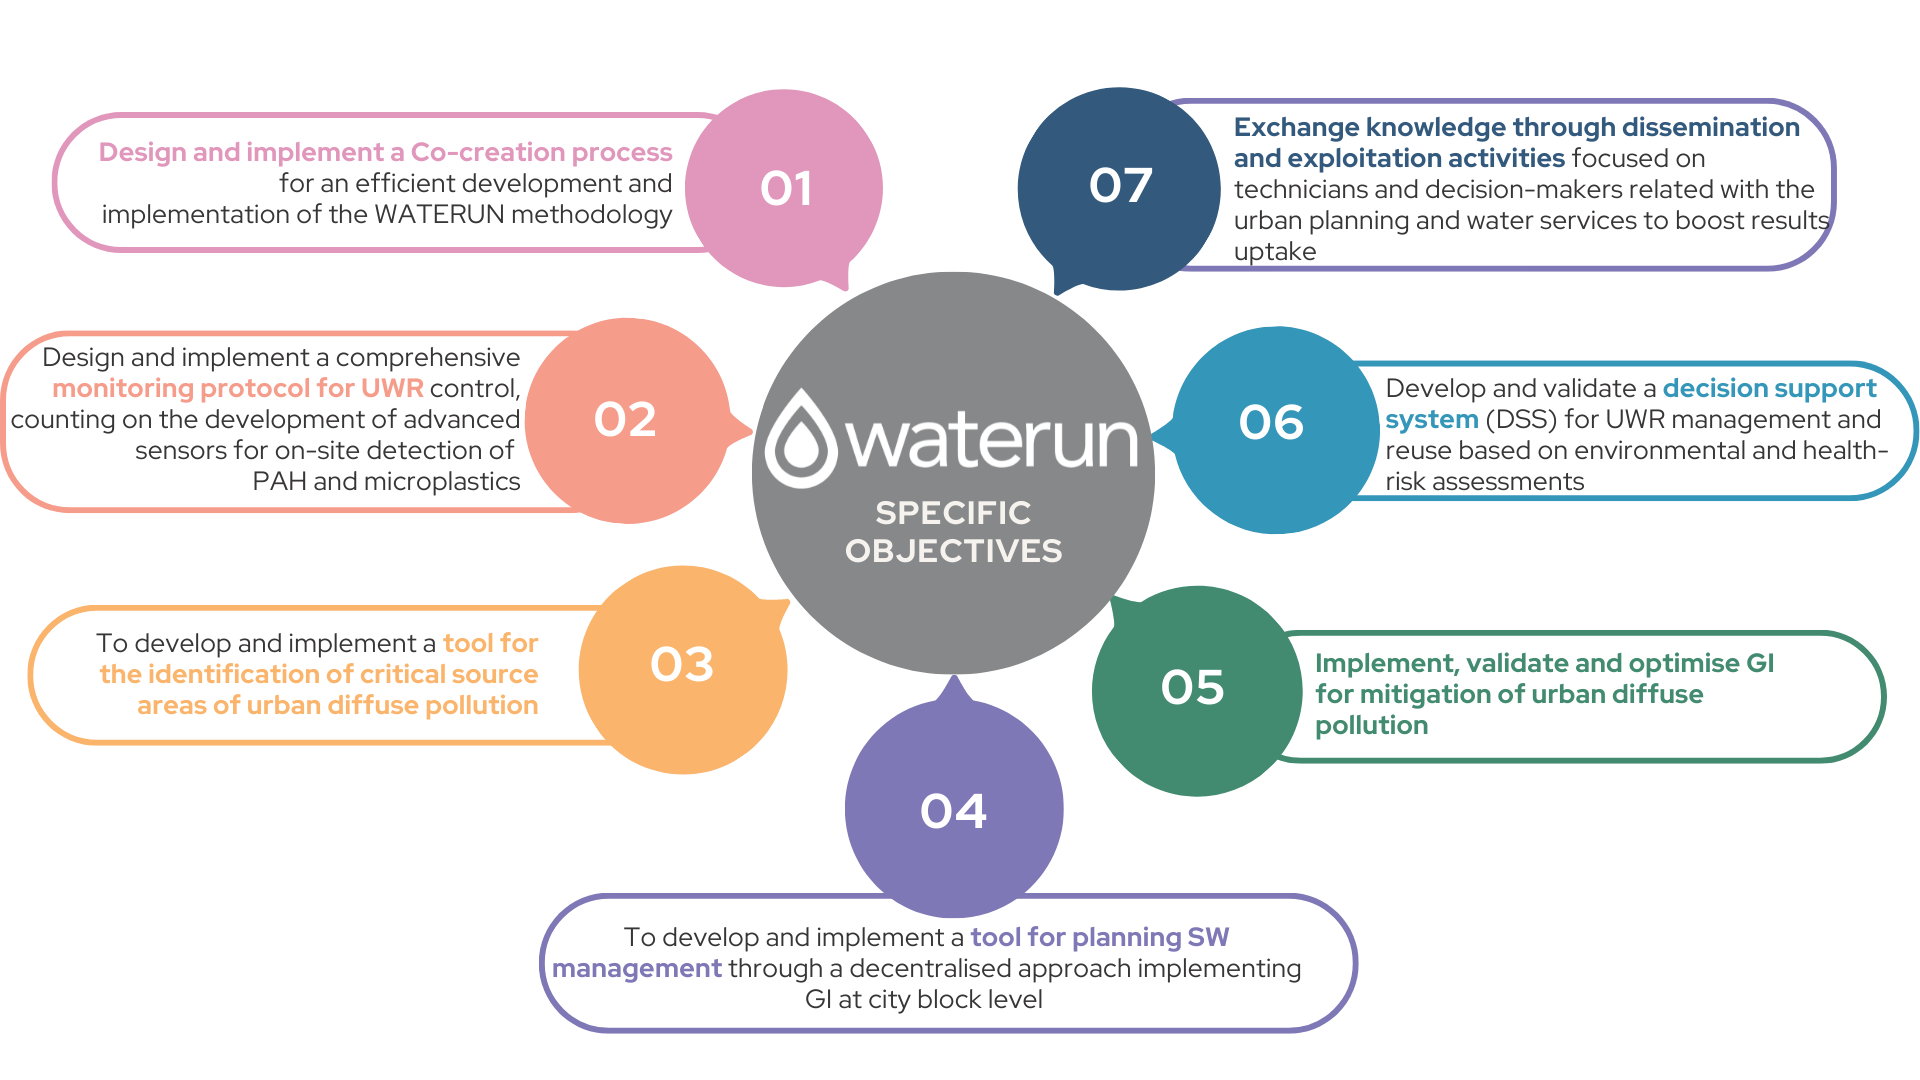 Waterun objectives